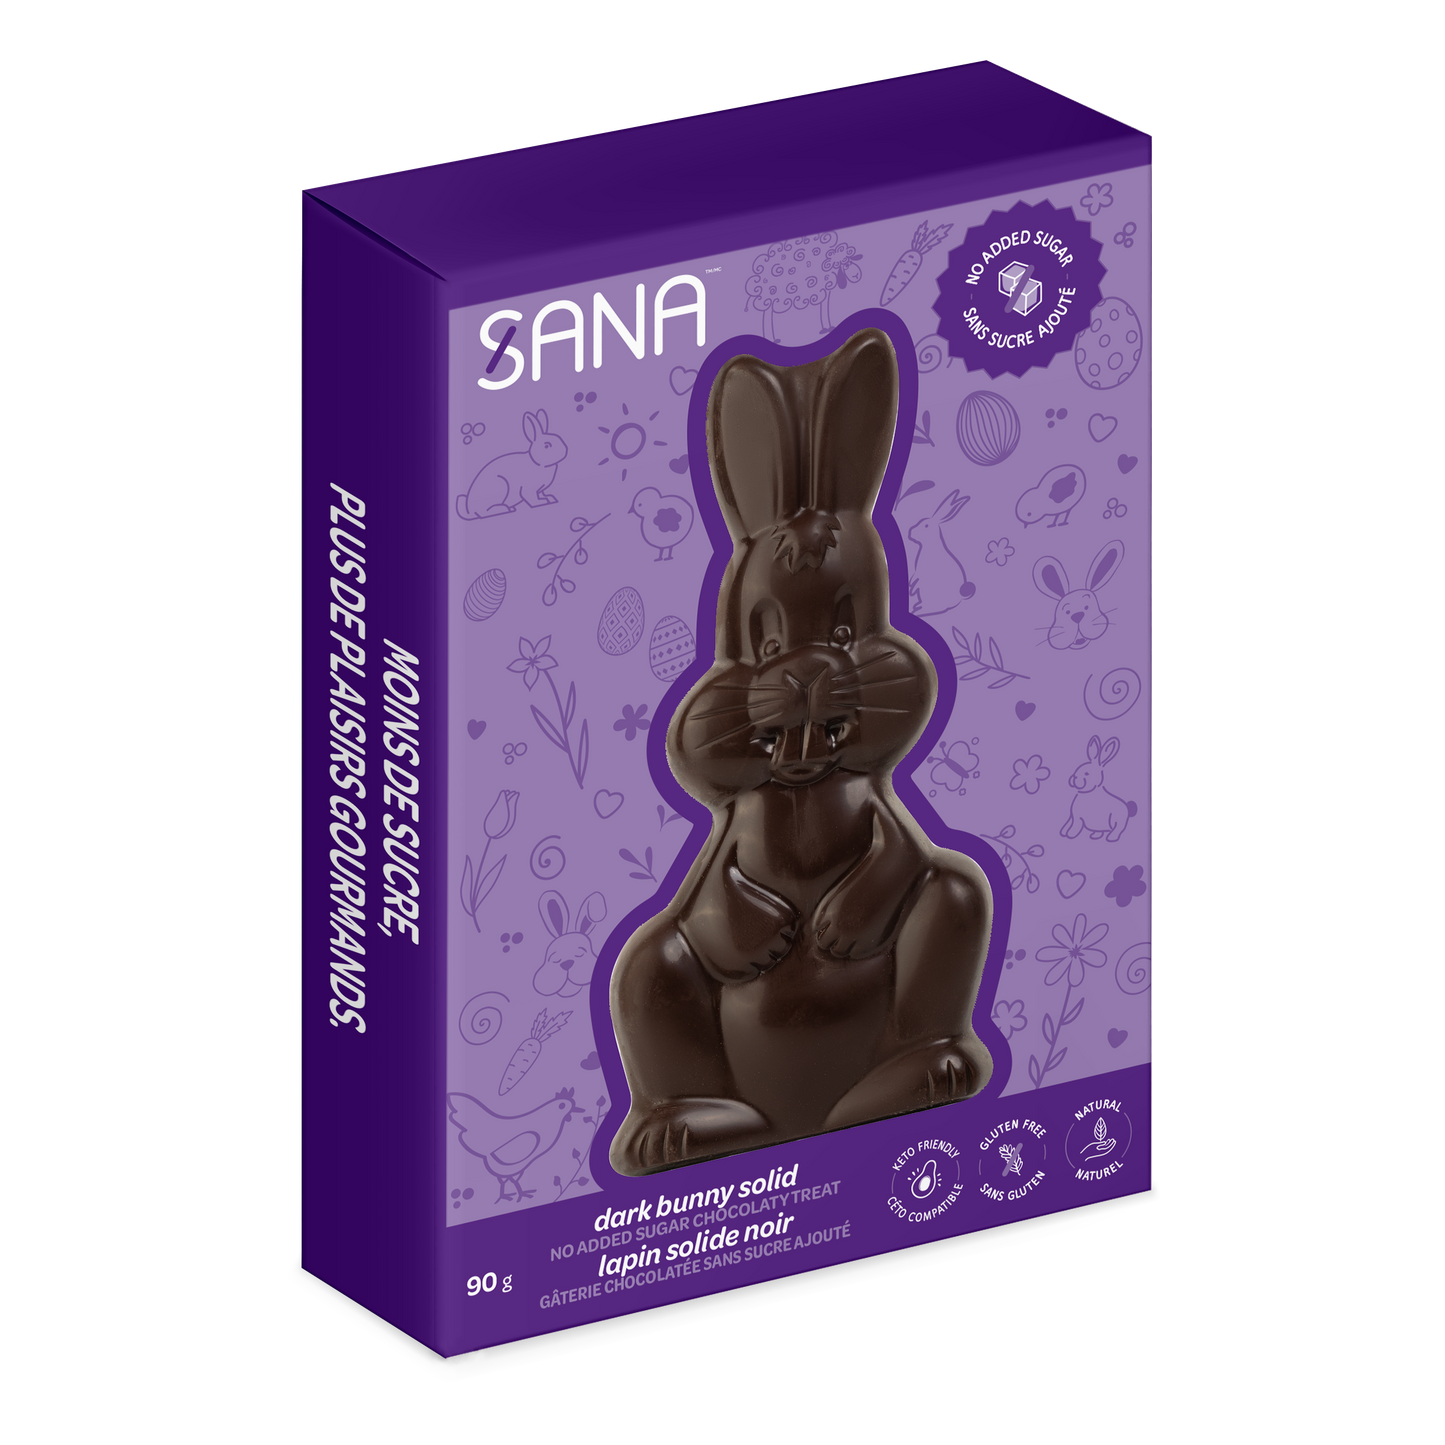 Dark chocolaty Easter bunny - Classic